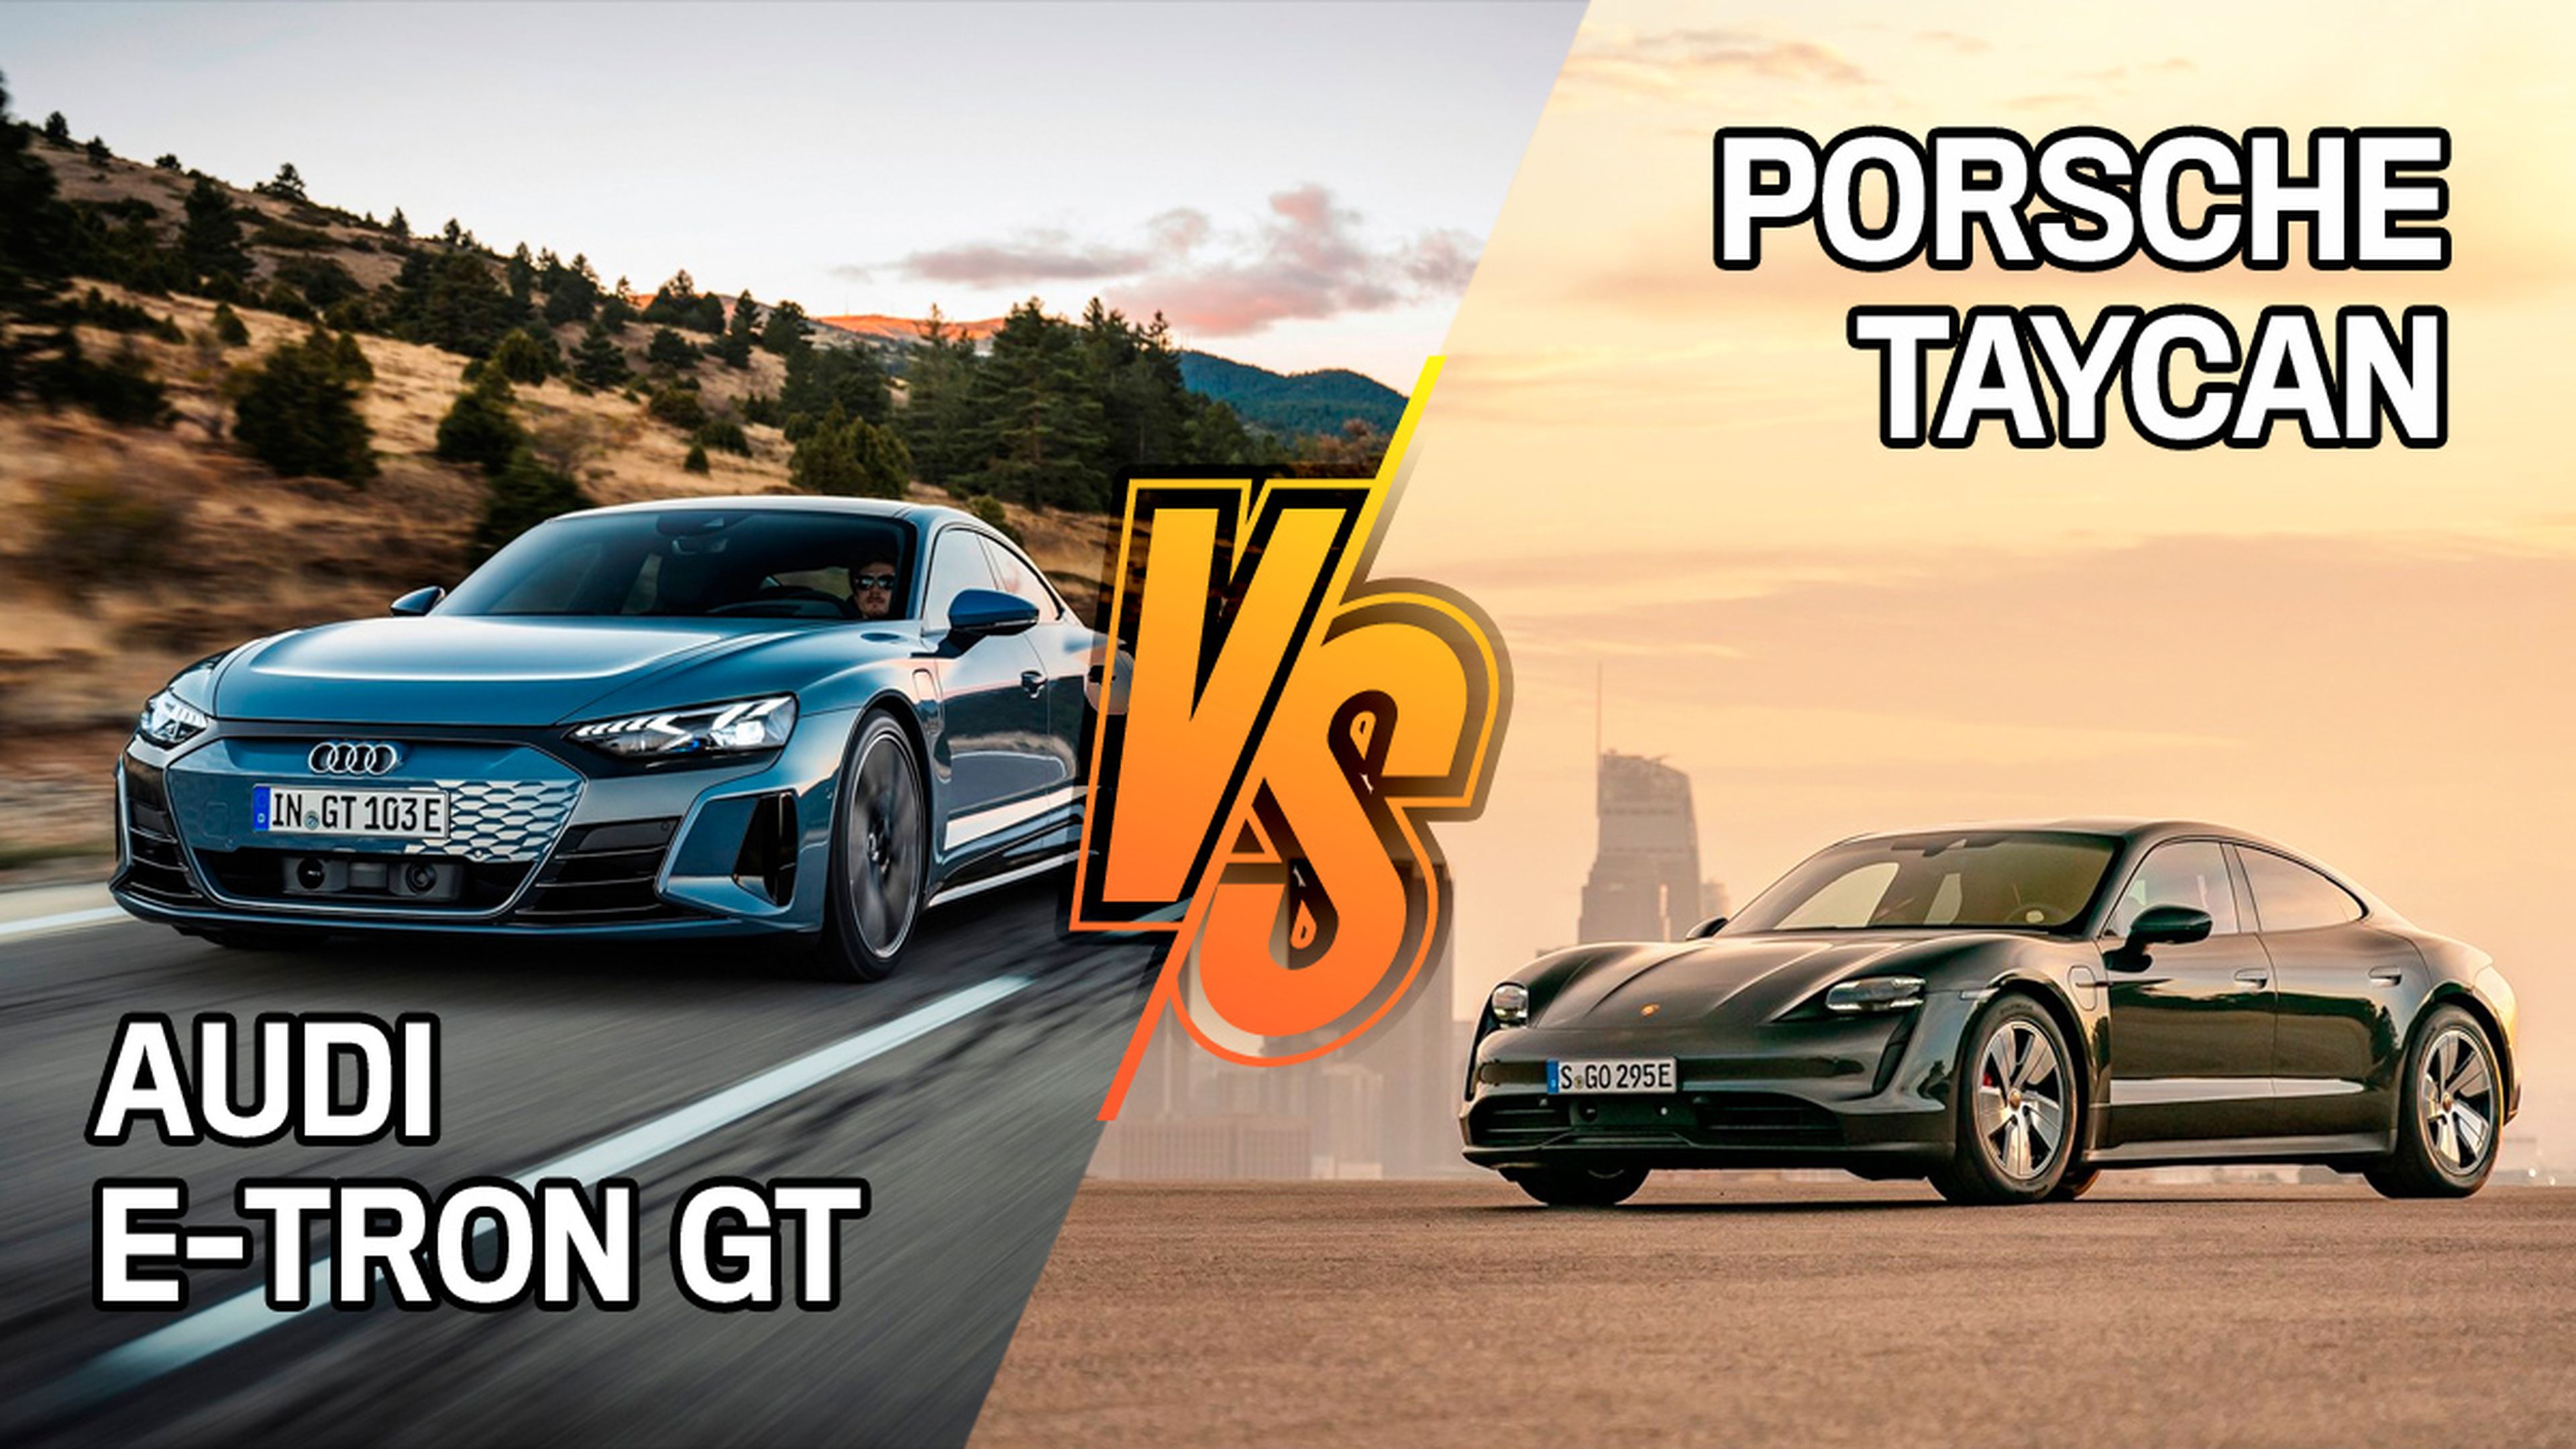 Audi e-tron GT quattro o Porsche Taycan, ¿cuál es mejor?